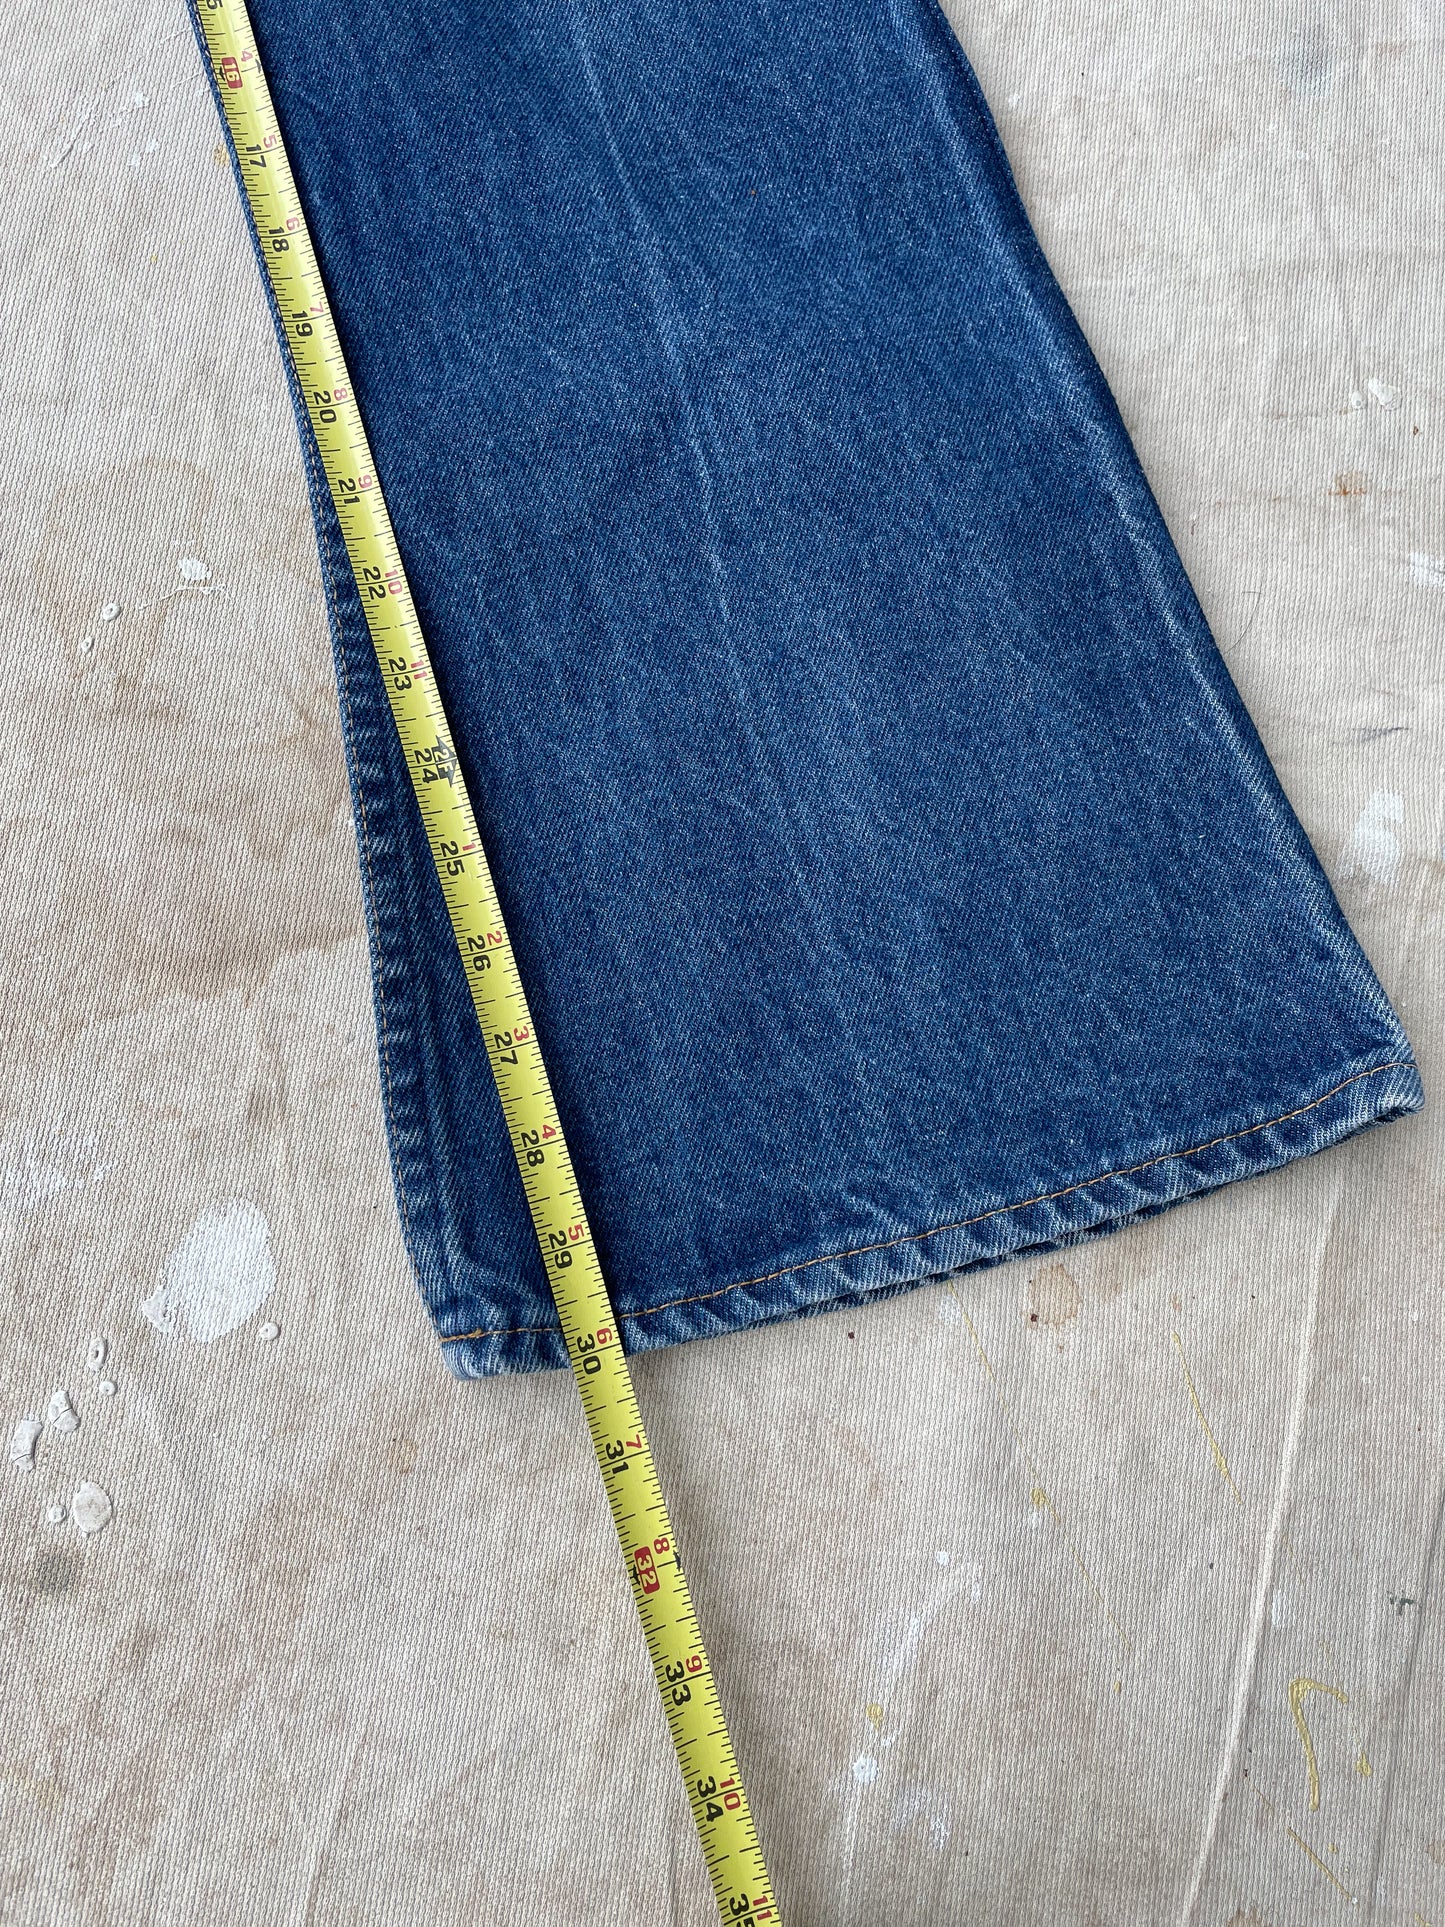 70's Levi's Orange Tab 646 Jeans—[33x30]